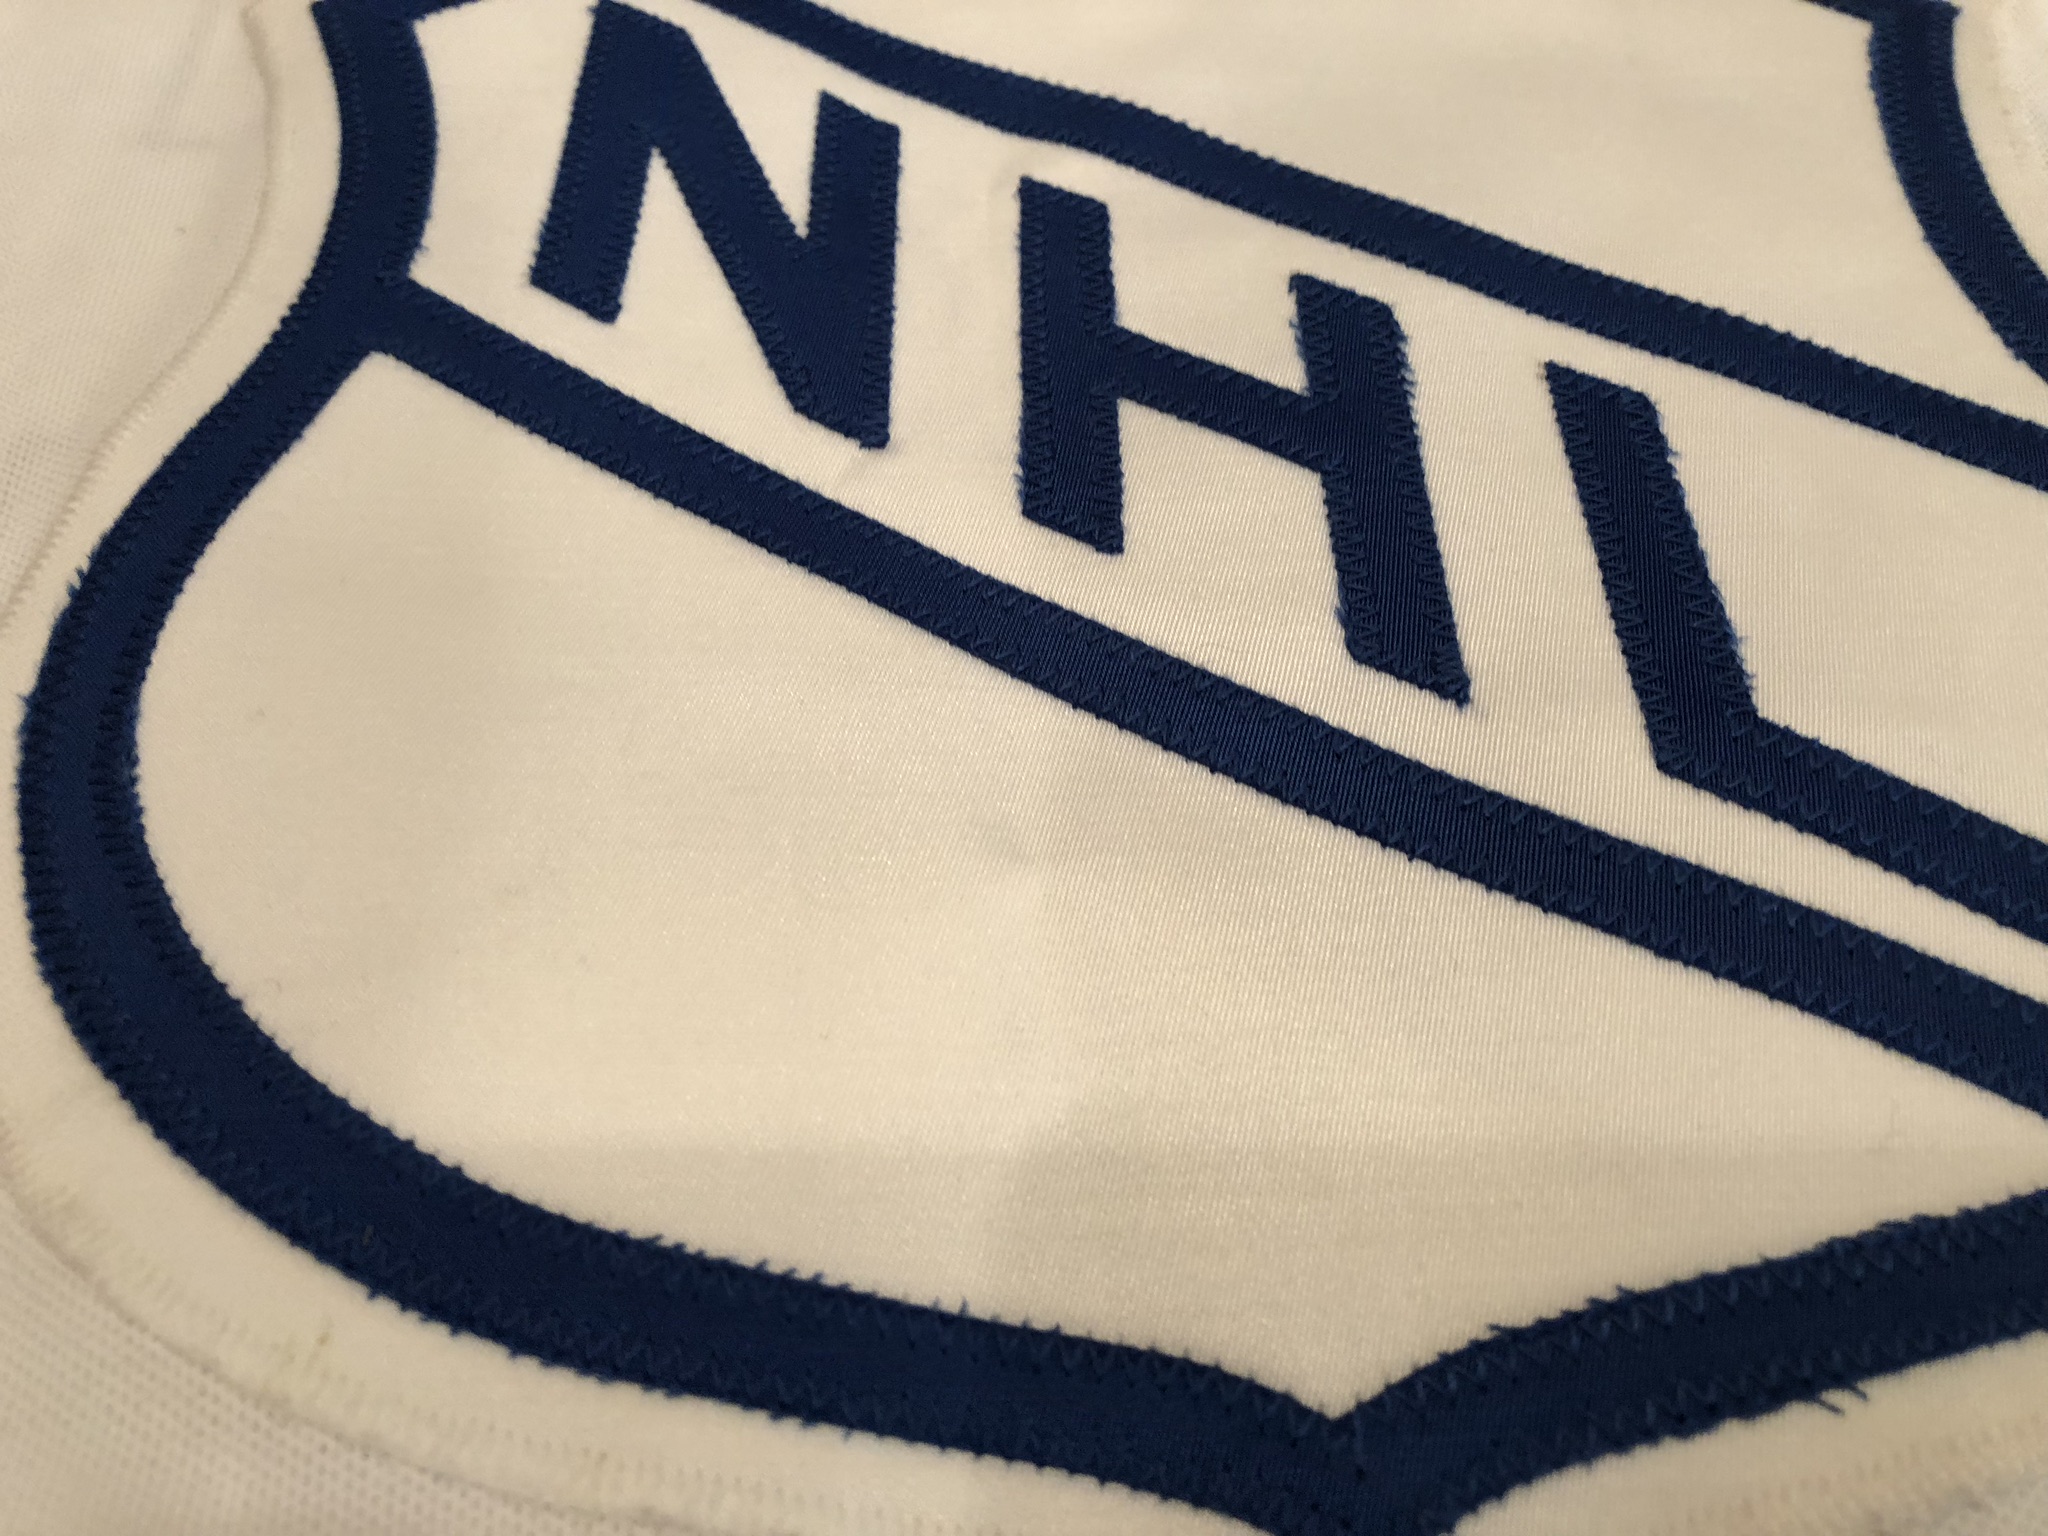 Patrick Roy Canadiens — Game Worn Goalie Jerseys